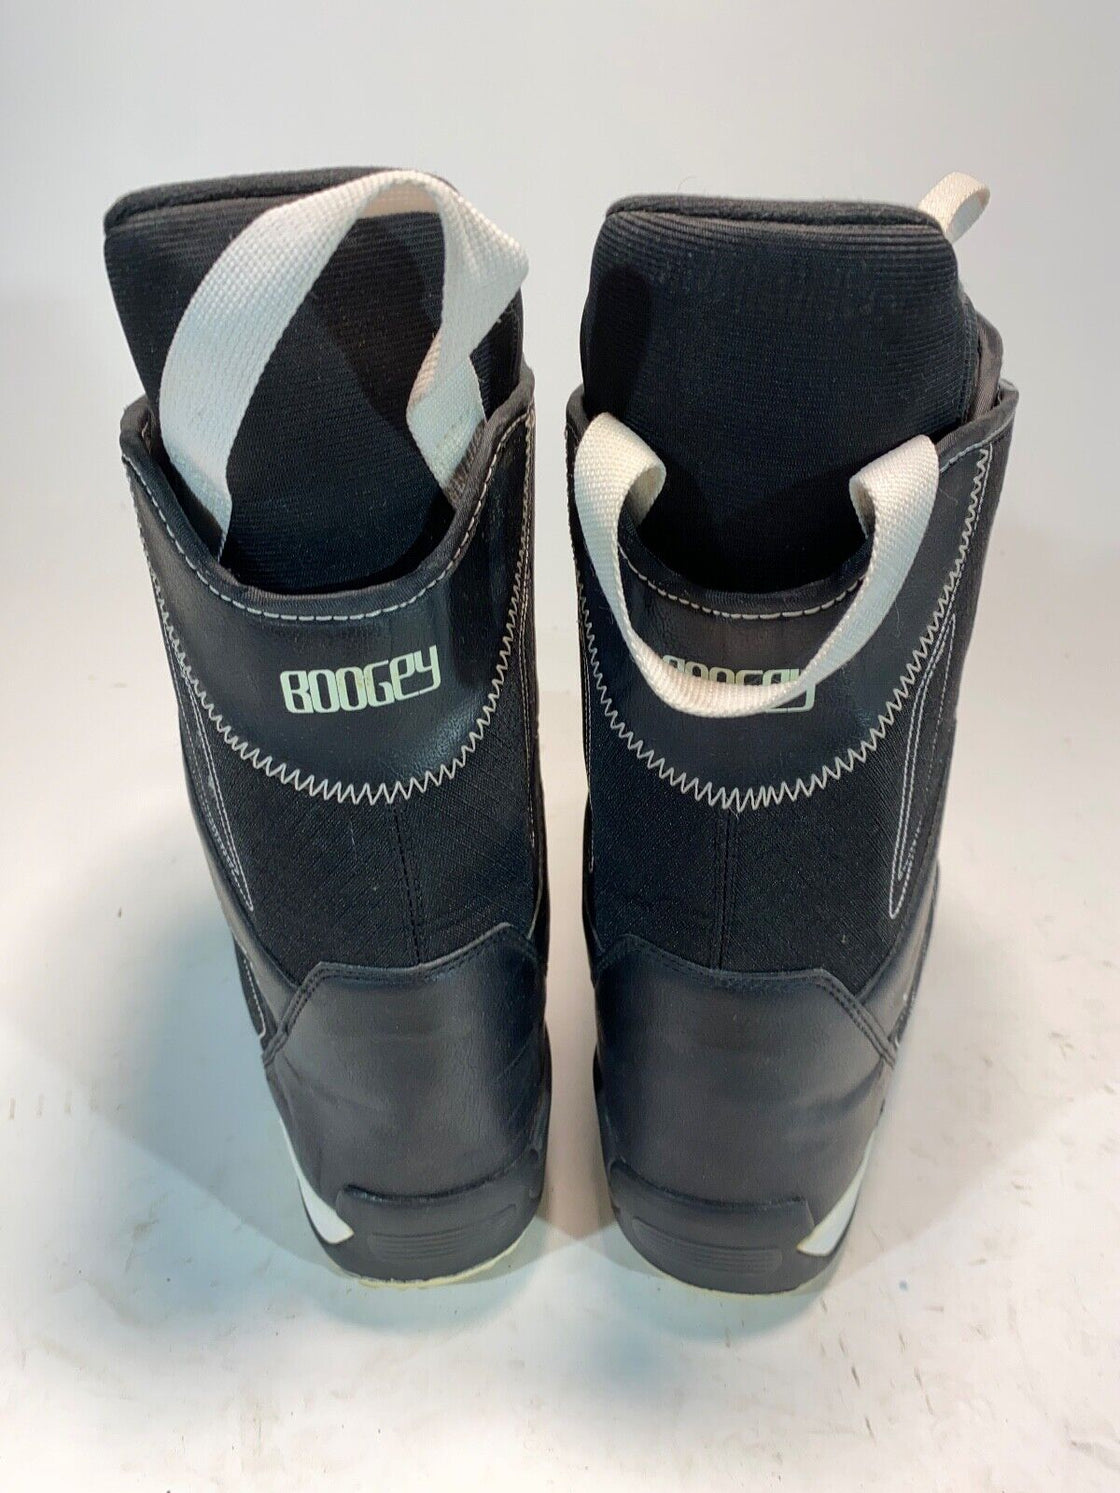 WEDZE Snowboard Boots Size EU42  US8.5  UK8  Mondo 270 mm